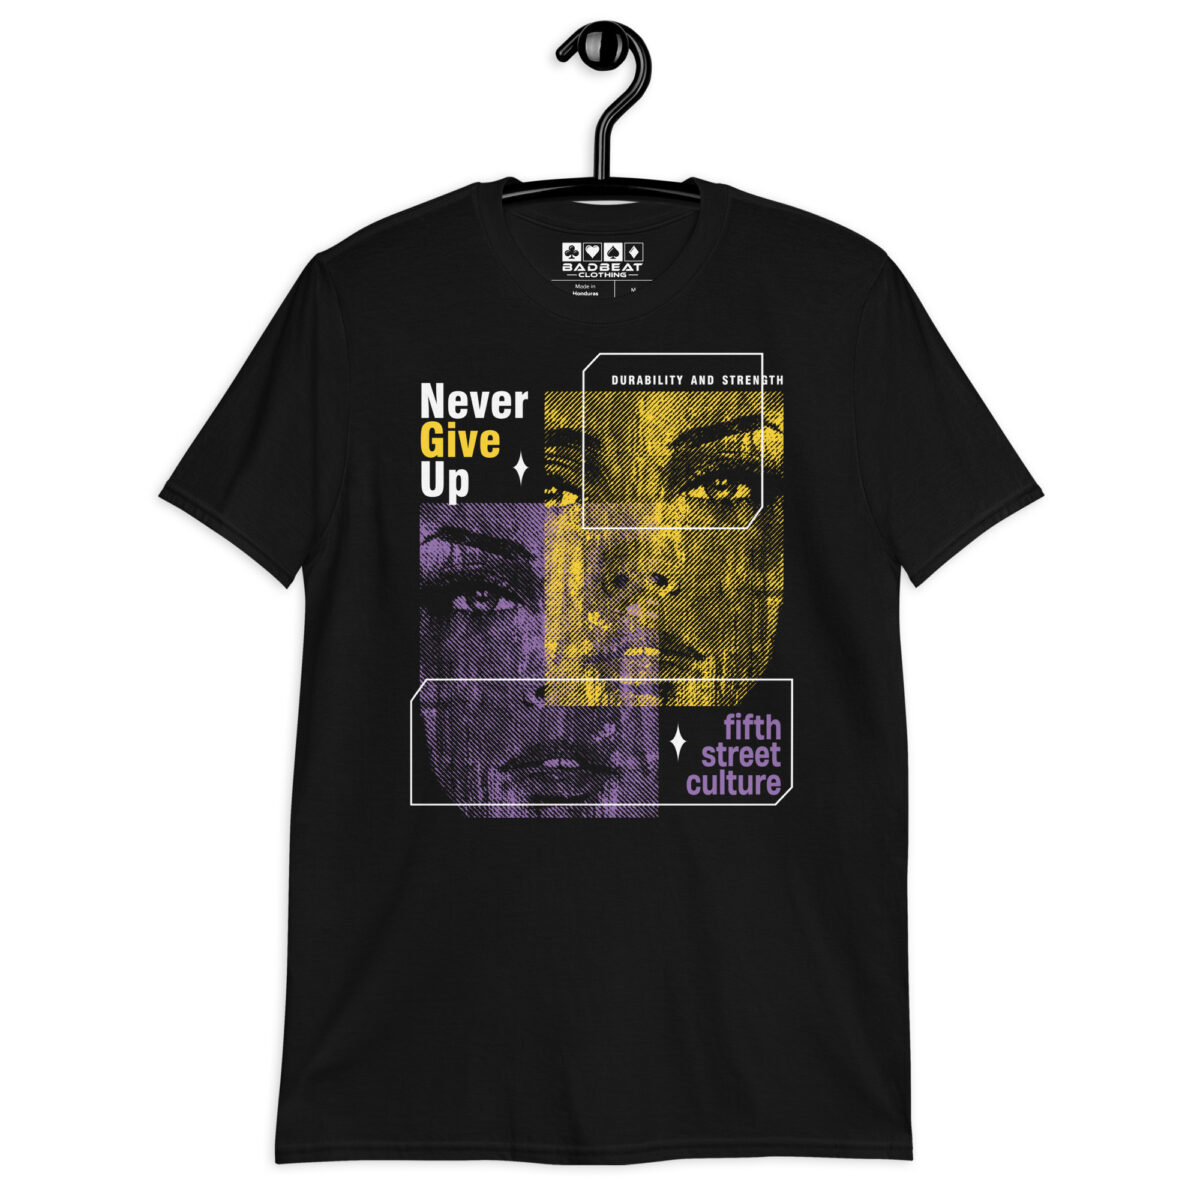 5th Street Culture ladies poker t-shirt on hanger